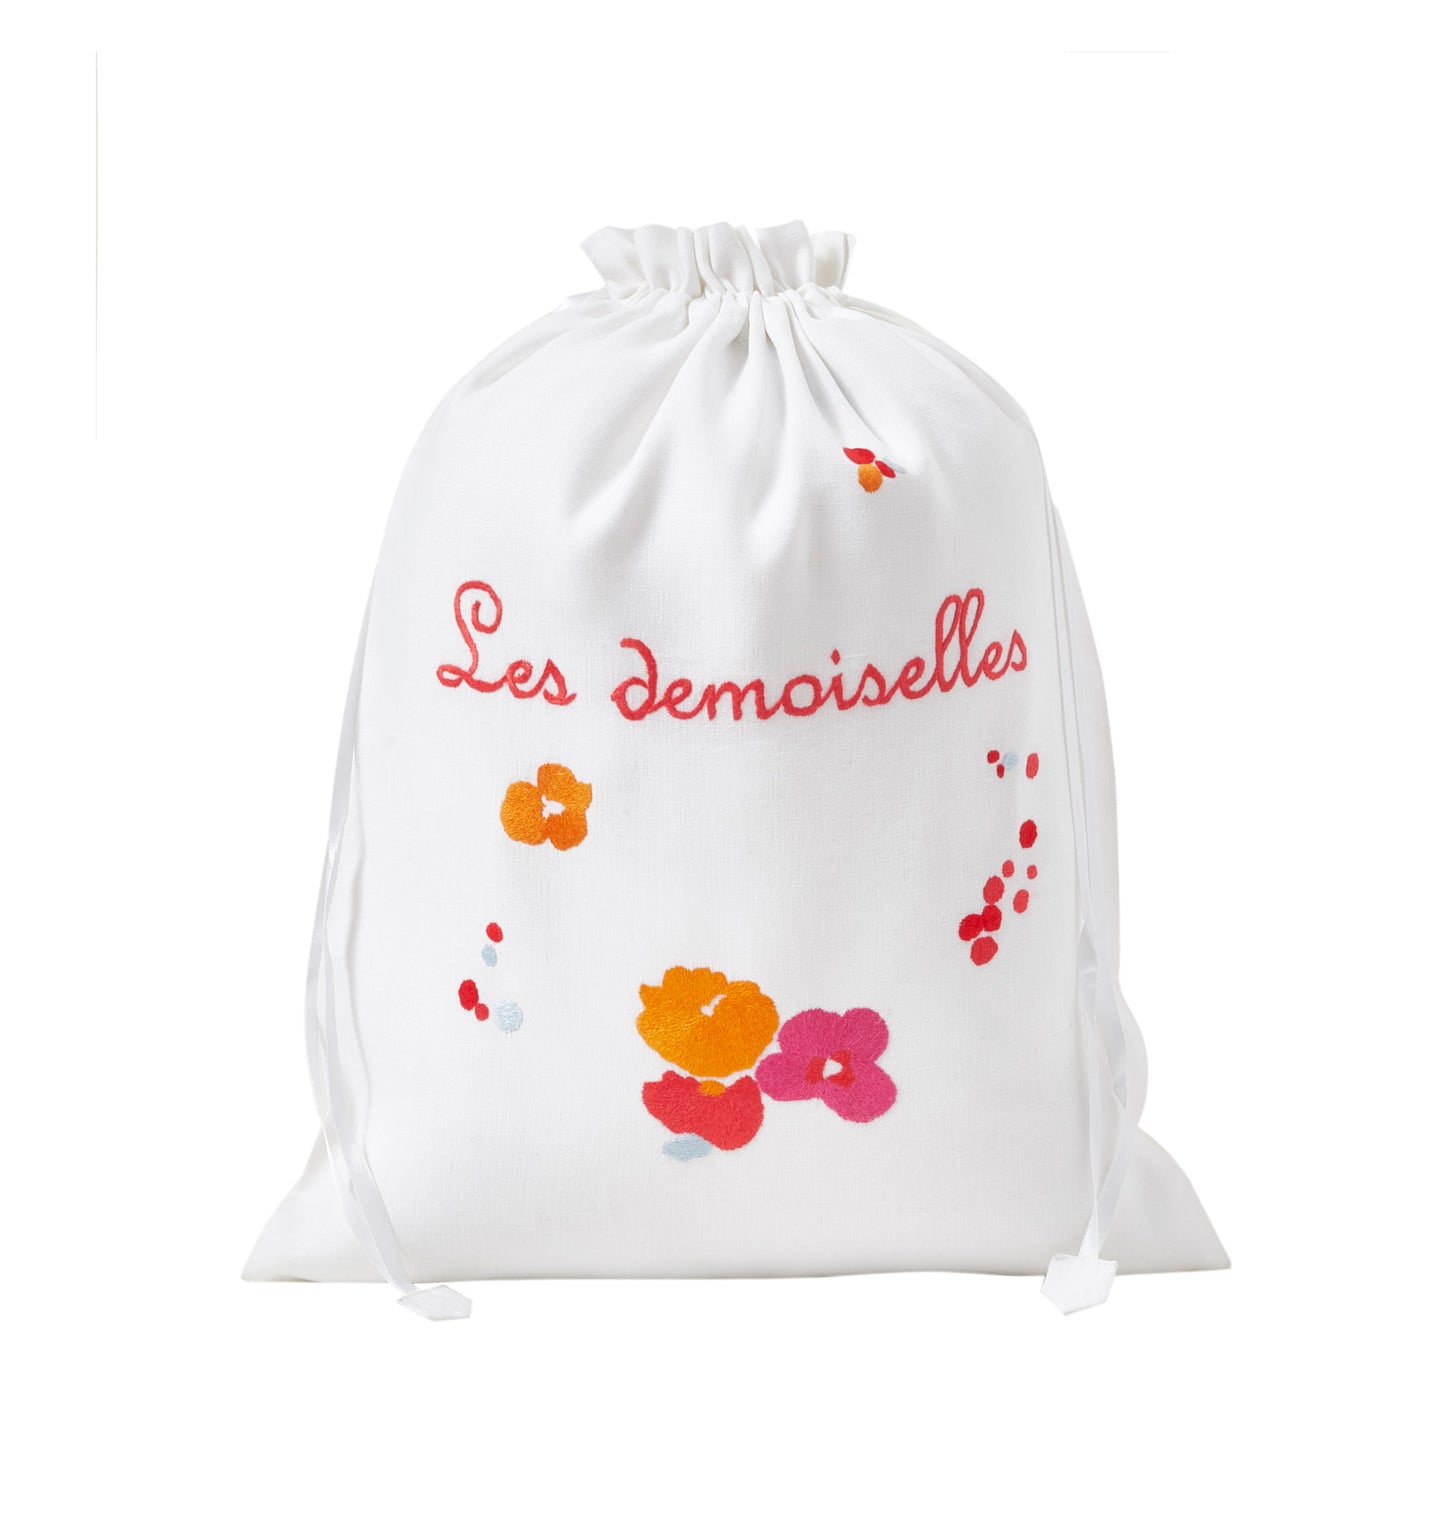 Demoiselles pink Lingerie Bag